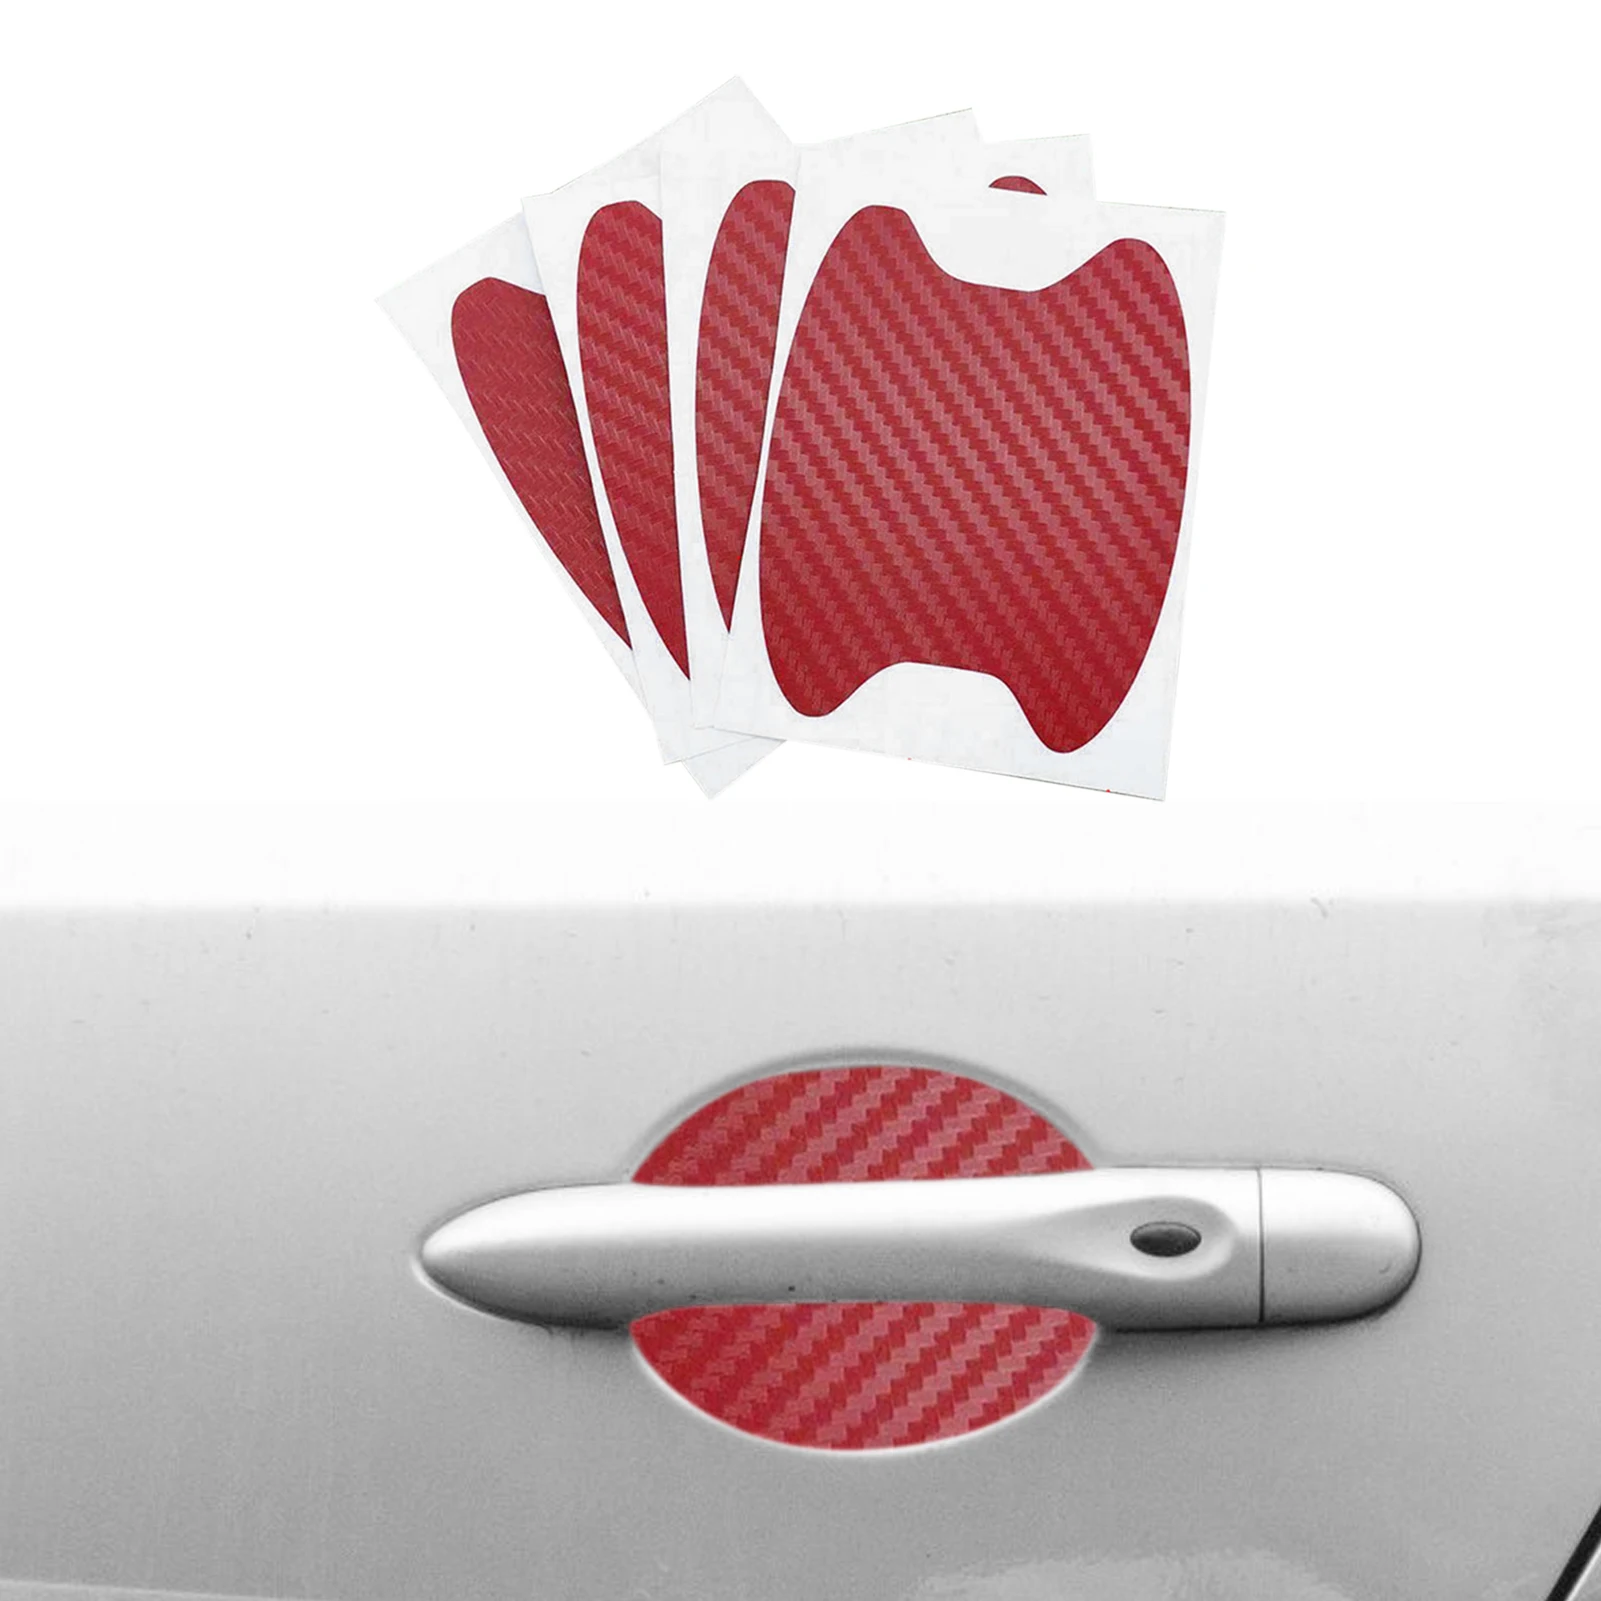 

4pcs Car Door Handle Scratch Protector Door Handle Paint Cover Guard Protective Films Side Paint Protection for Car Handles